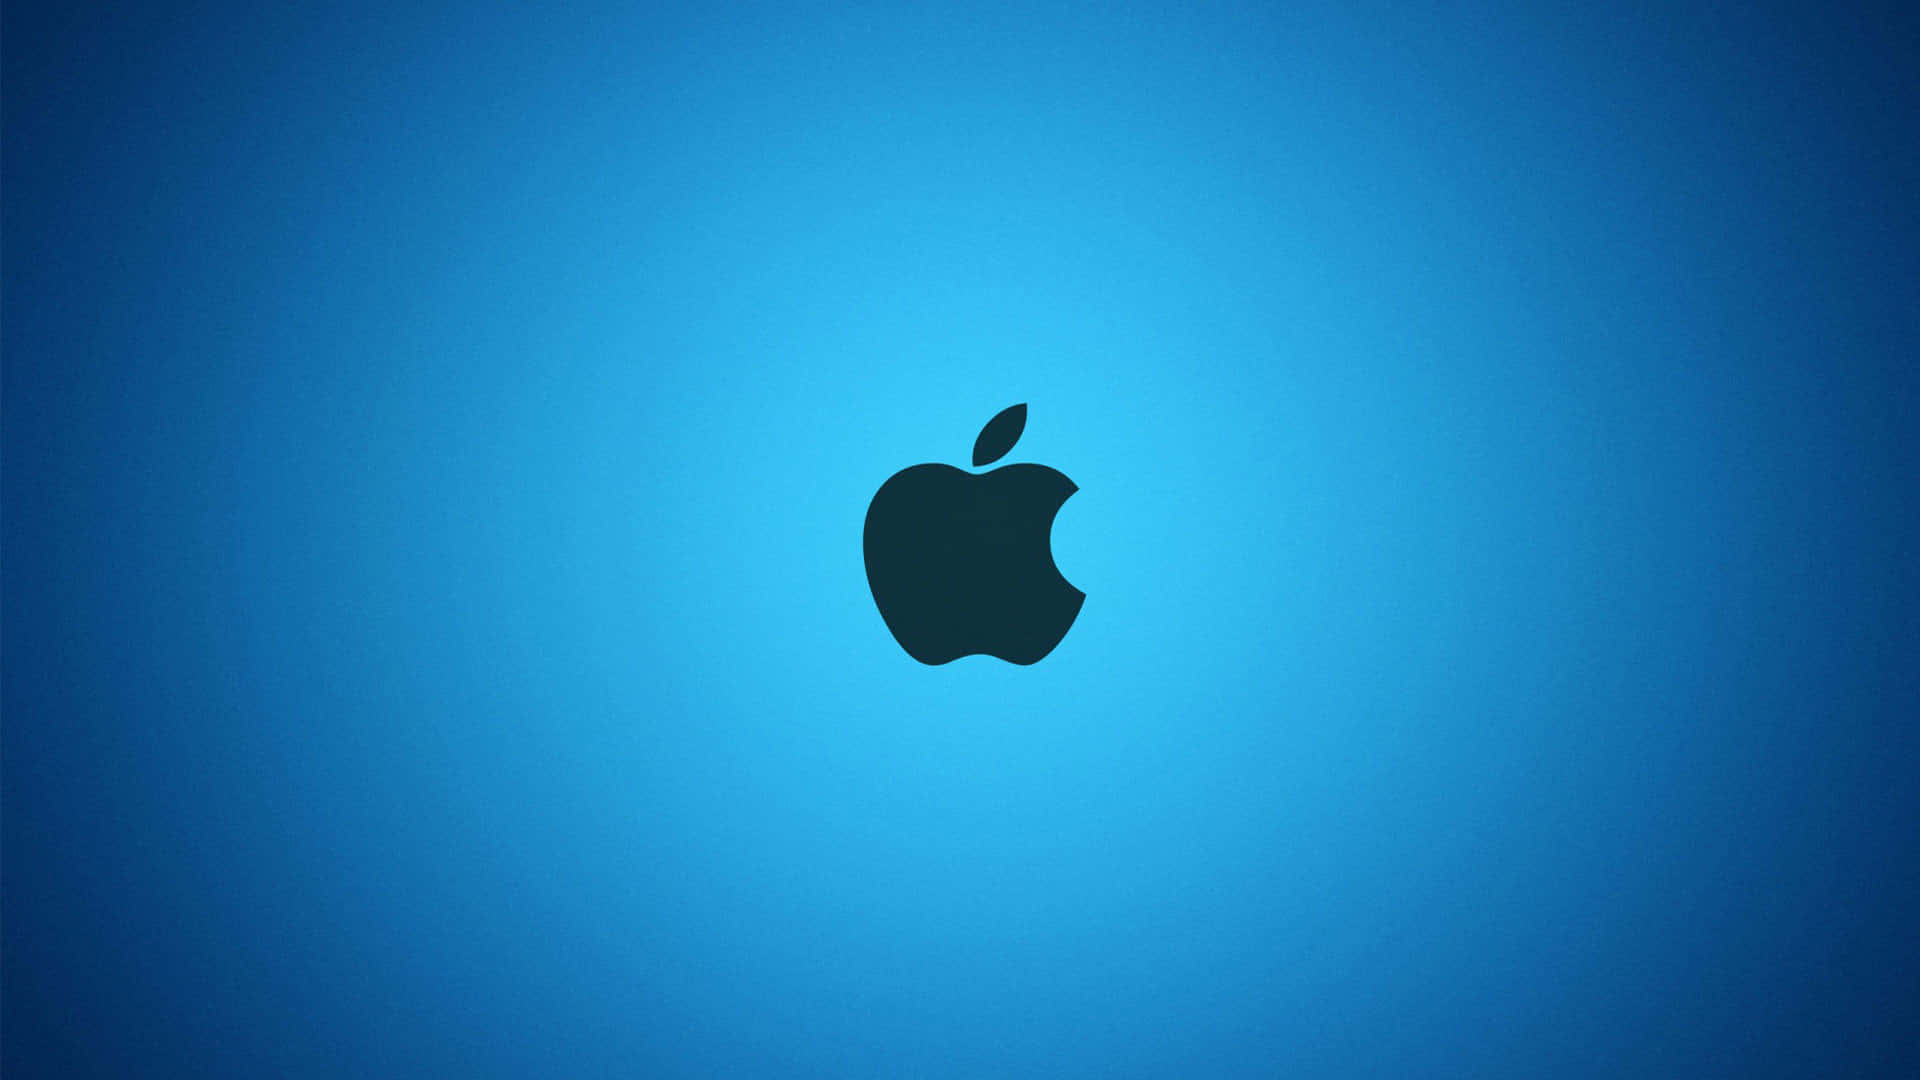 Sleek Apple Logo on Vibrant Gradient Background